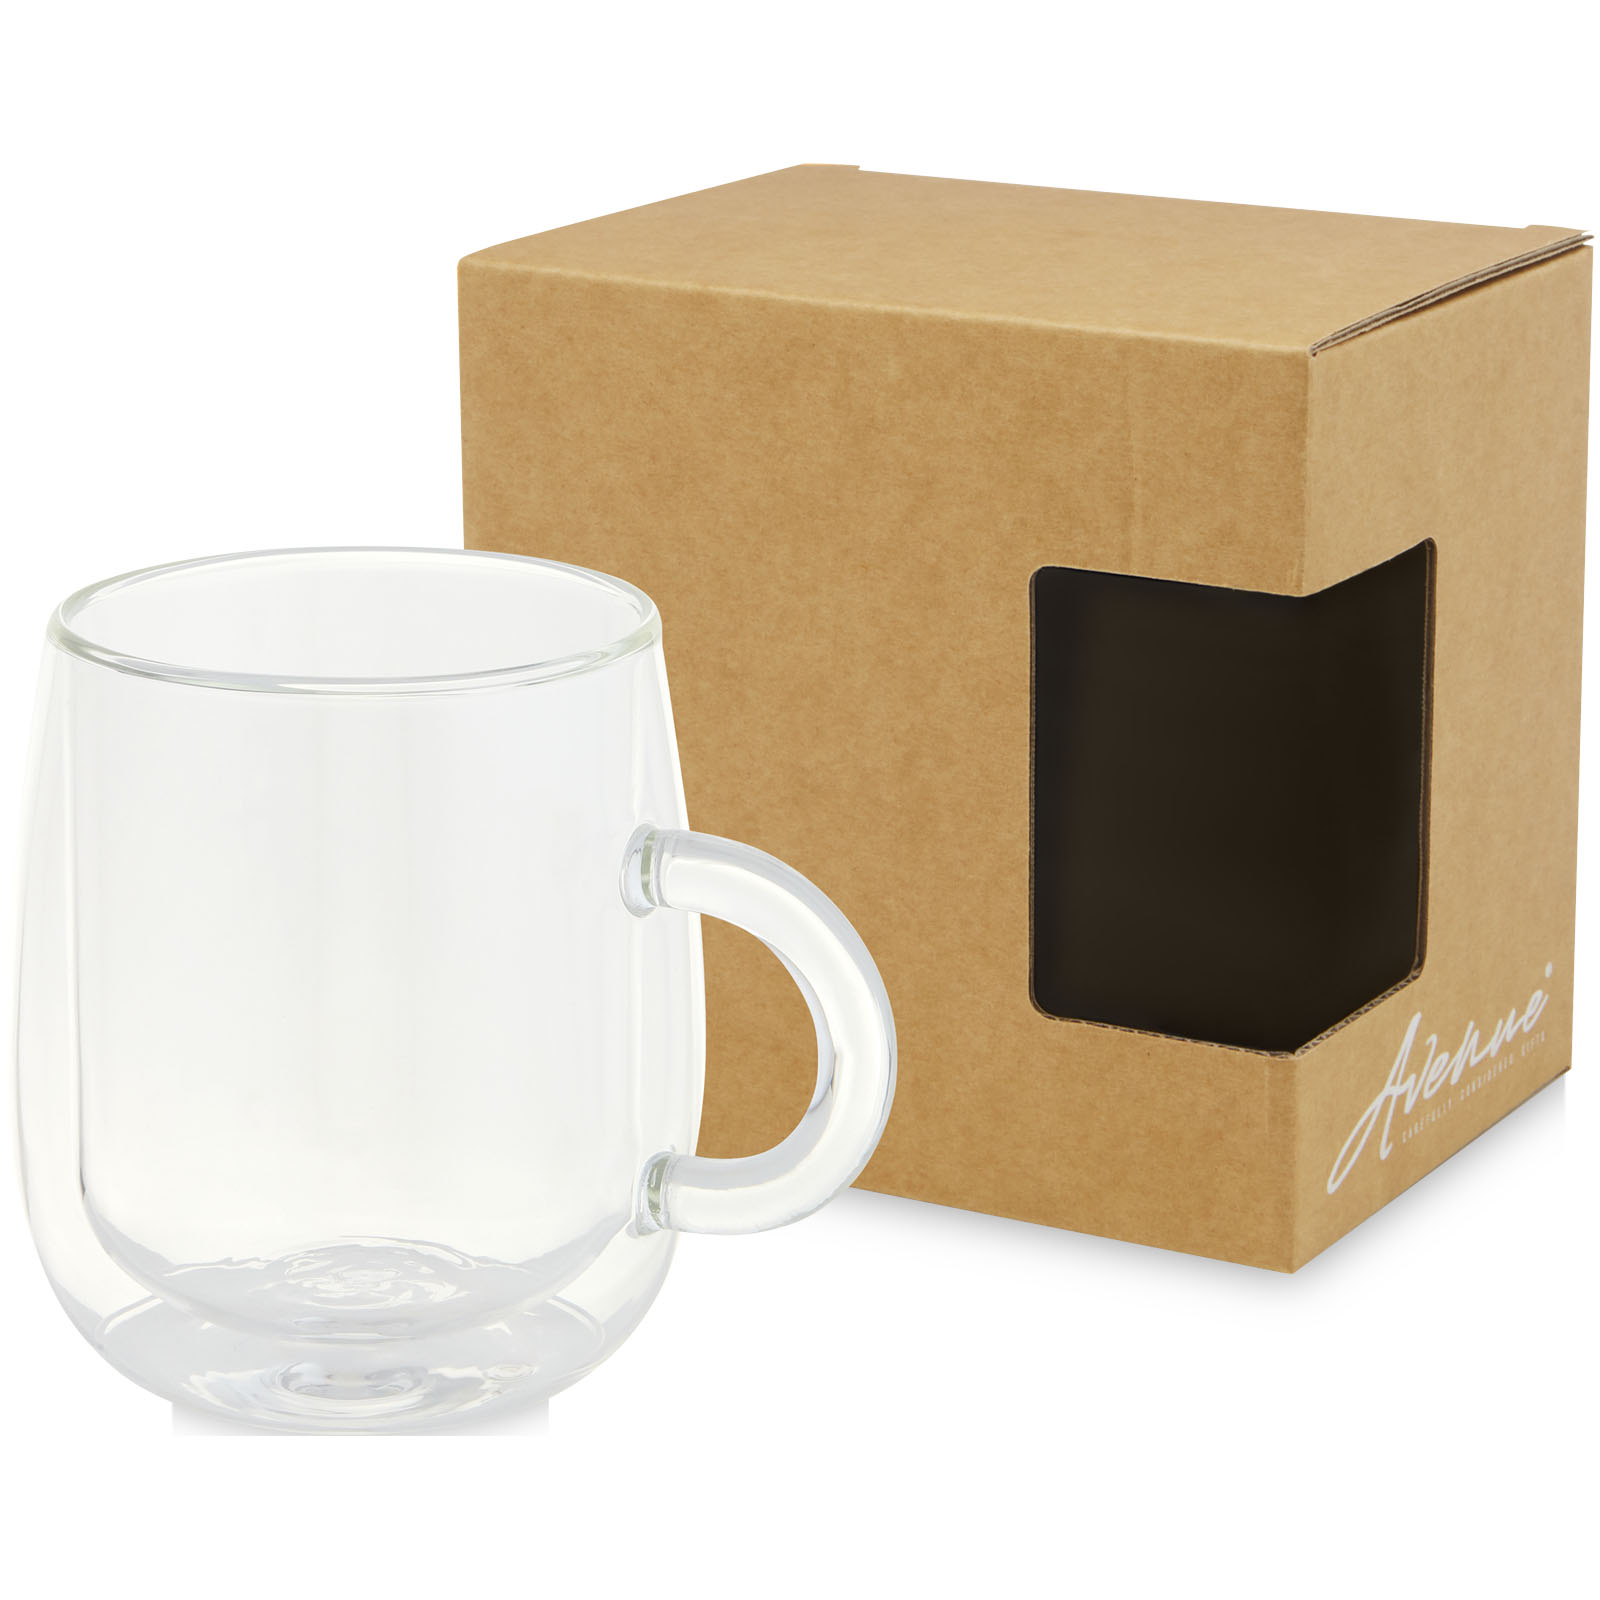 Standard mugs - Iris 330 ml glass mug